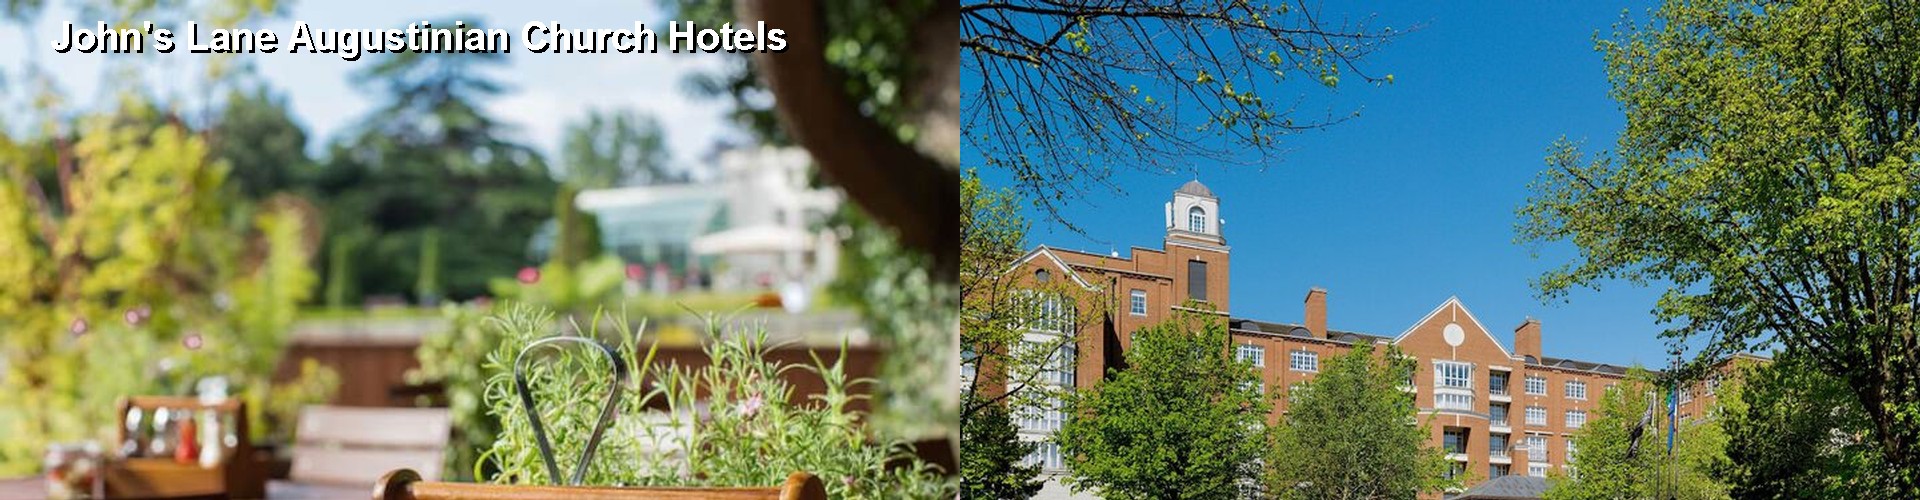 5 Best Hotels near John's Lane Augustinian Church